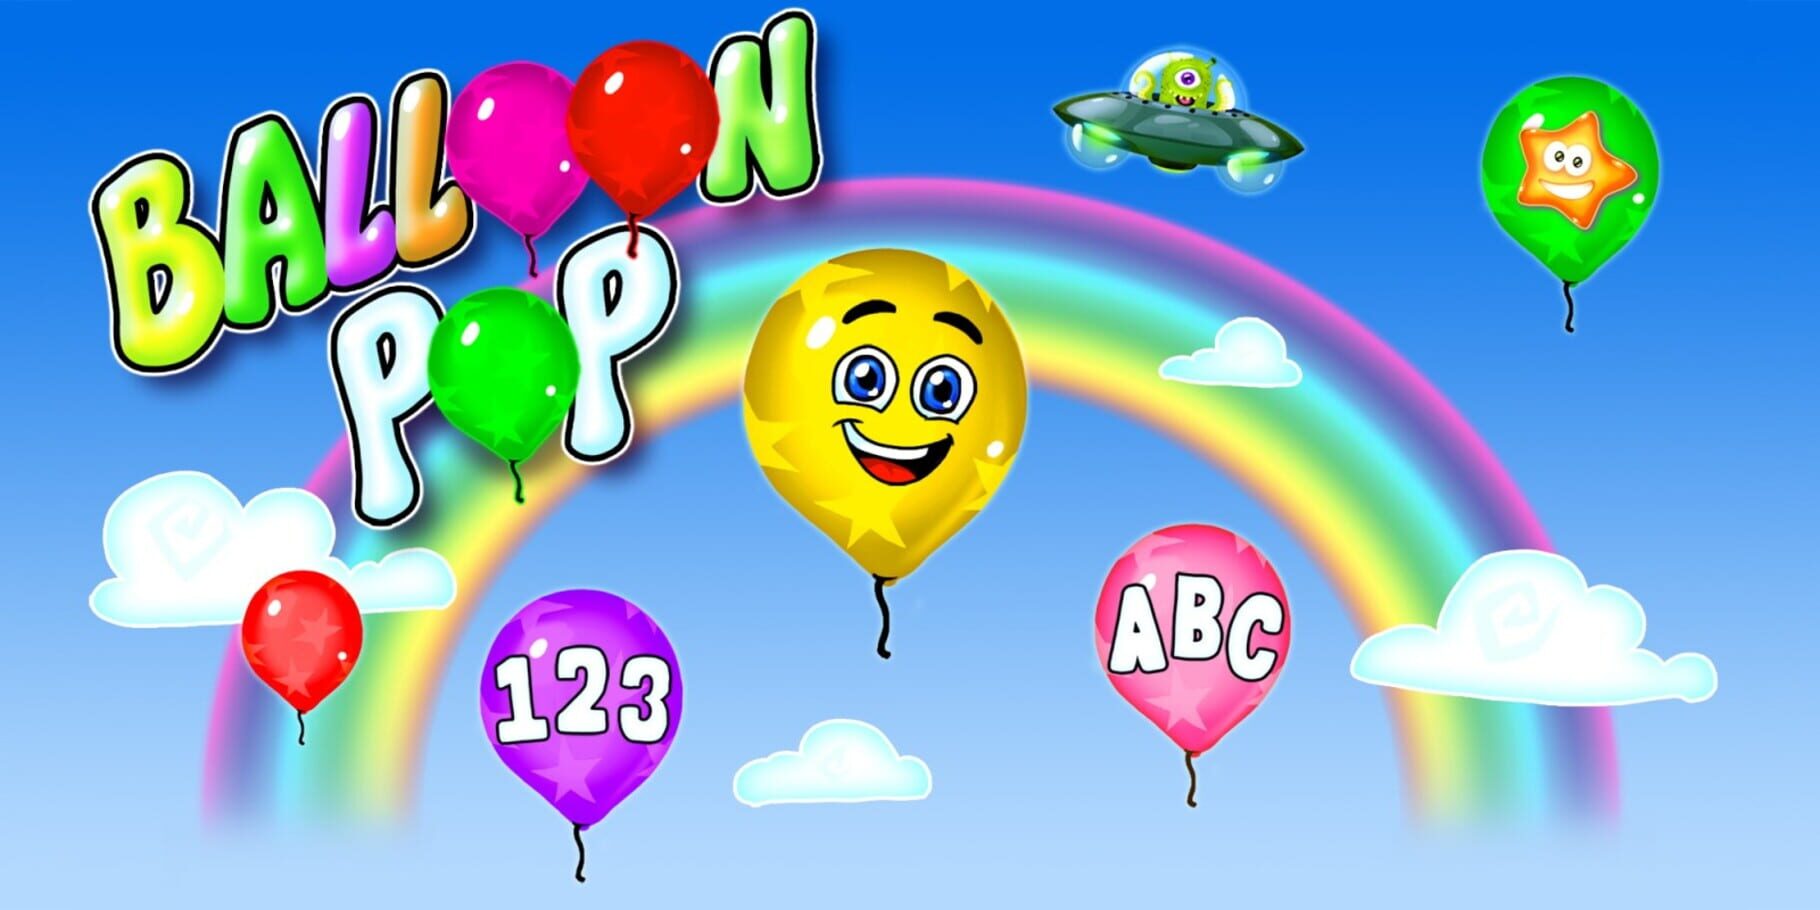 Balloon Pop artwork